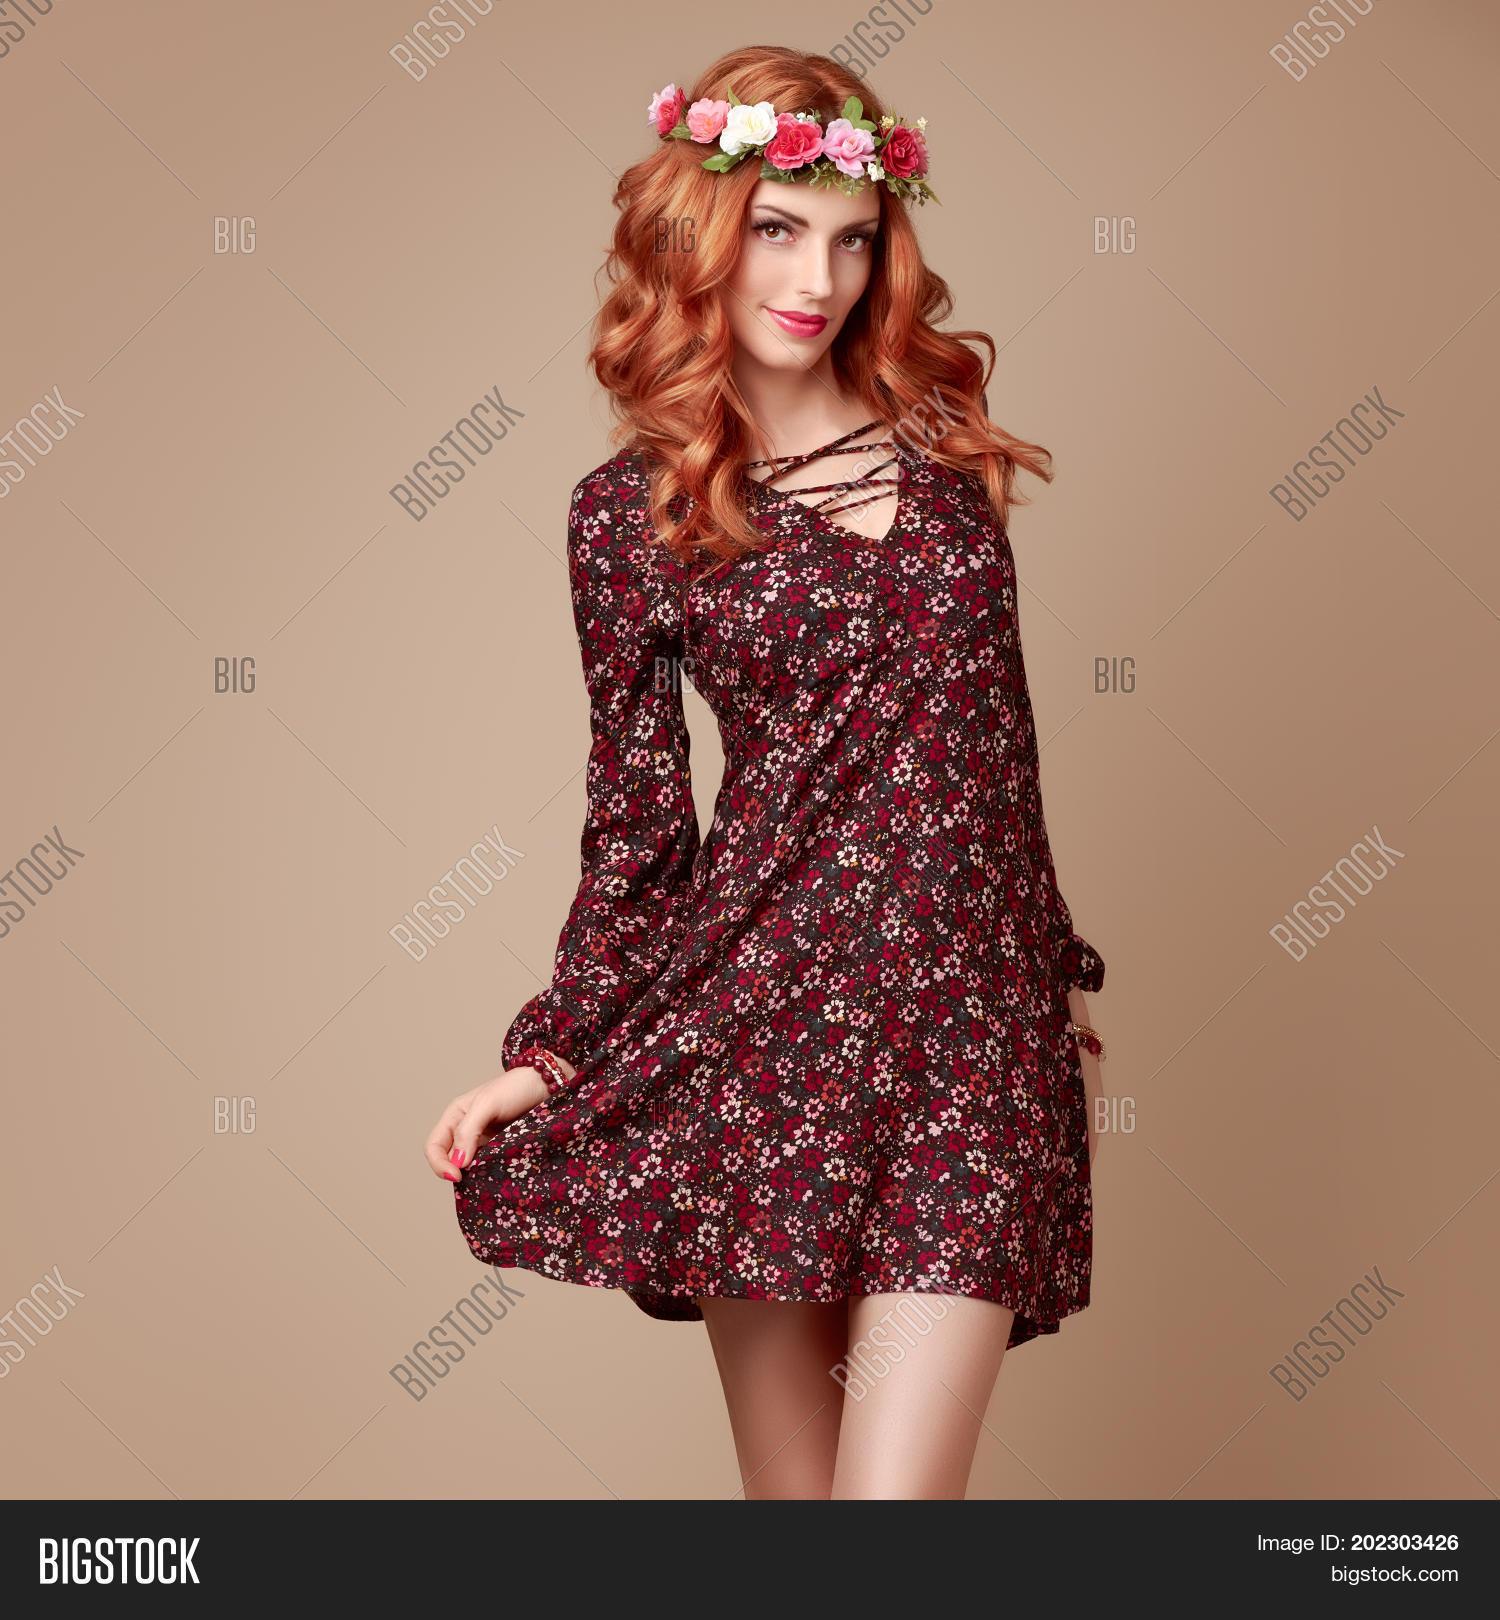 Redhead fashion models